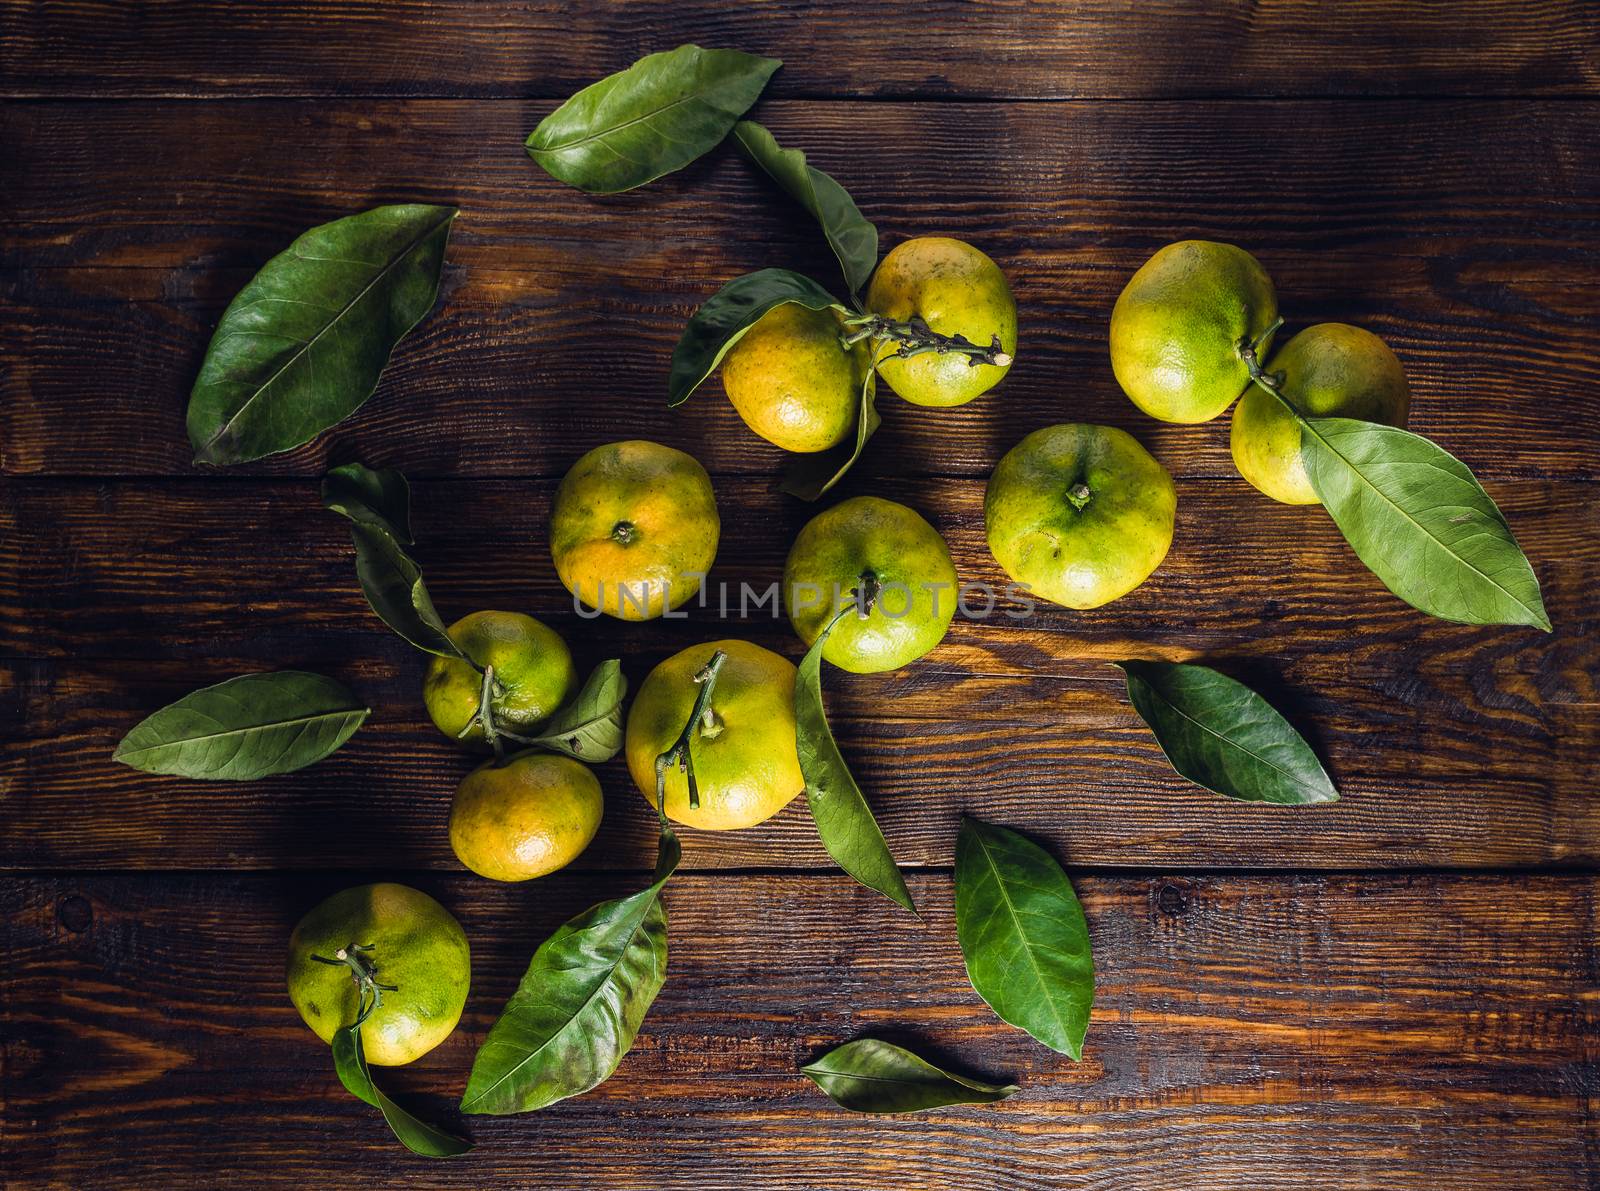 Tangerines with Leaves by Seva_blsv